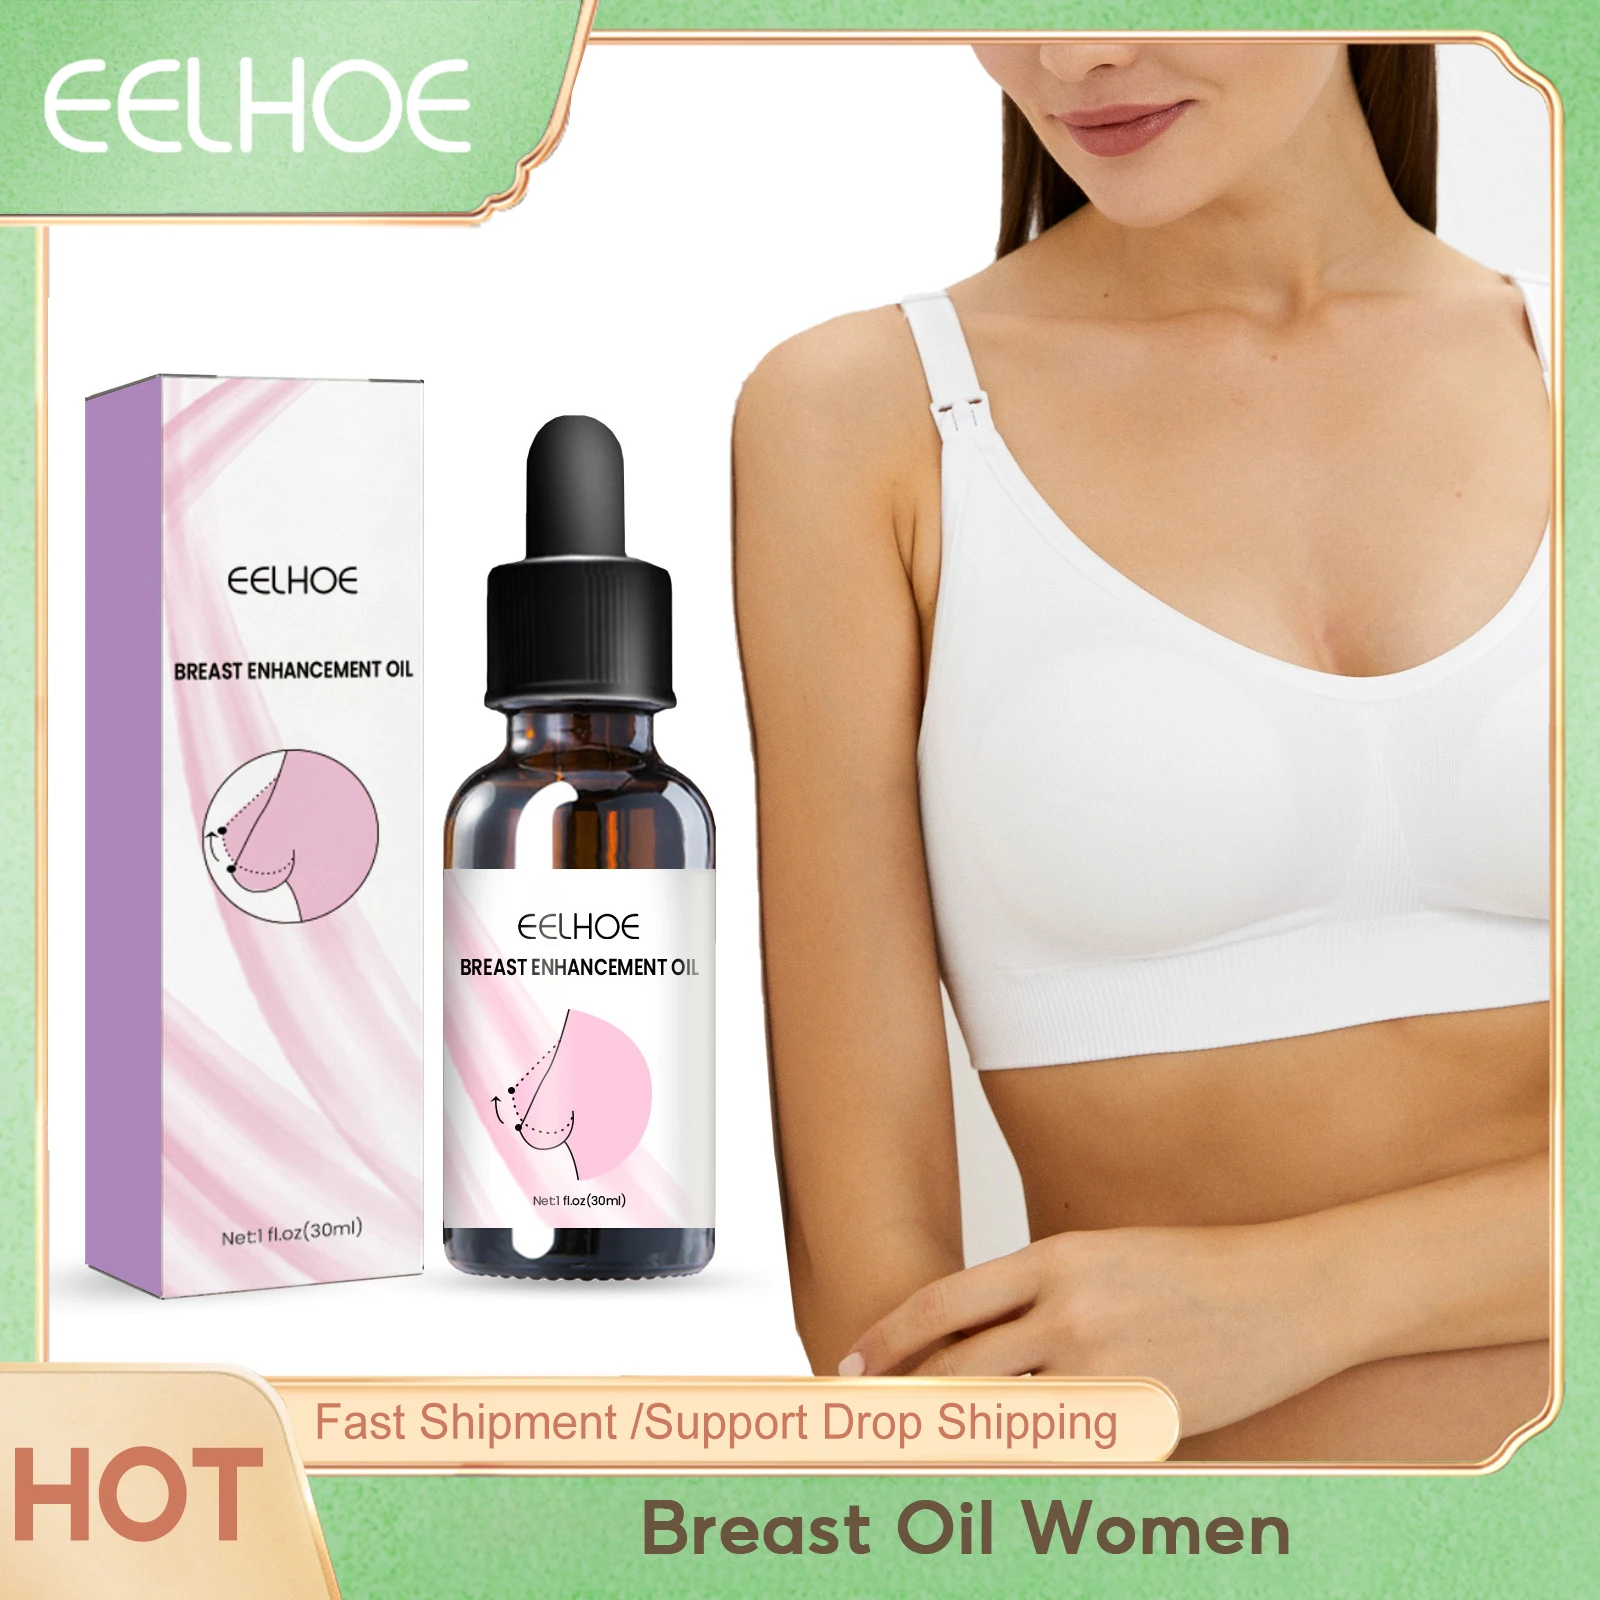 

EELHOE Breast Enlargement Essential Oil Lift Firming Boob Chest Enhancer Breast Plump Growth Massage Bigger Chest Body Care 30ml